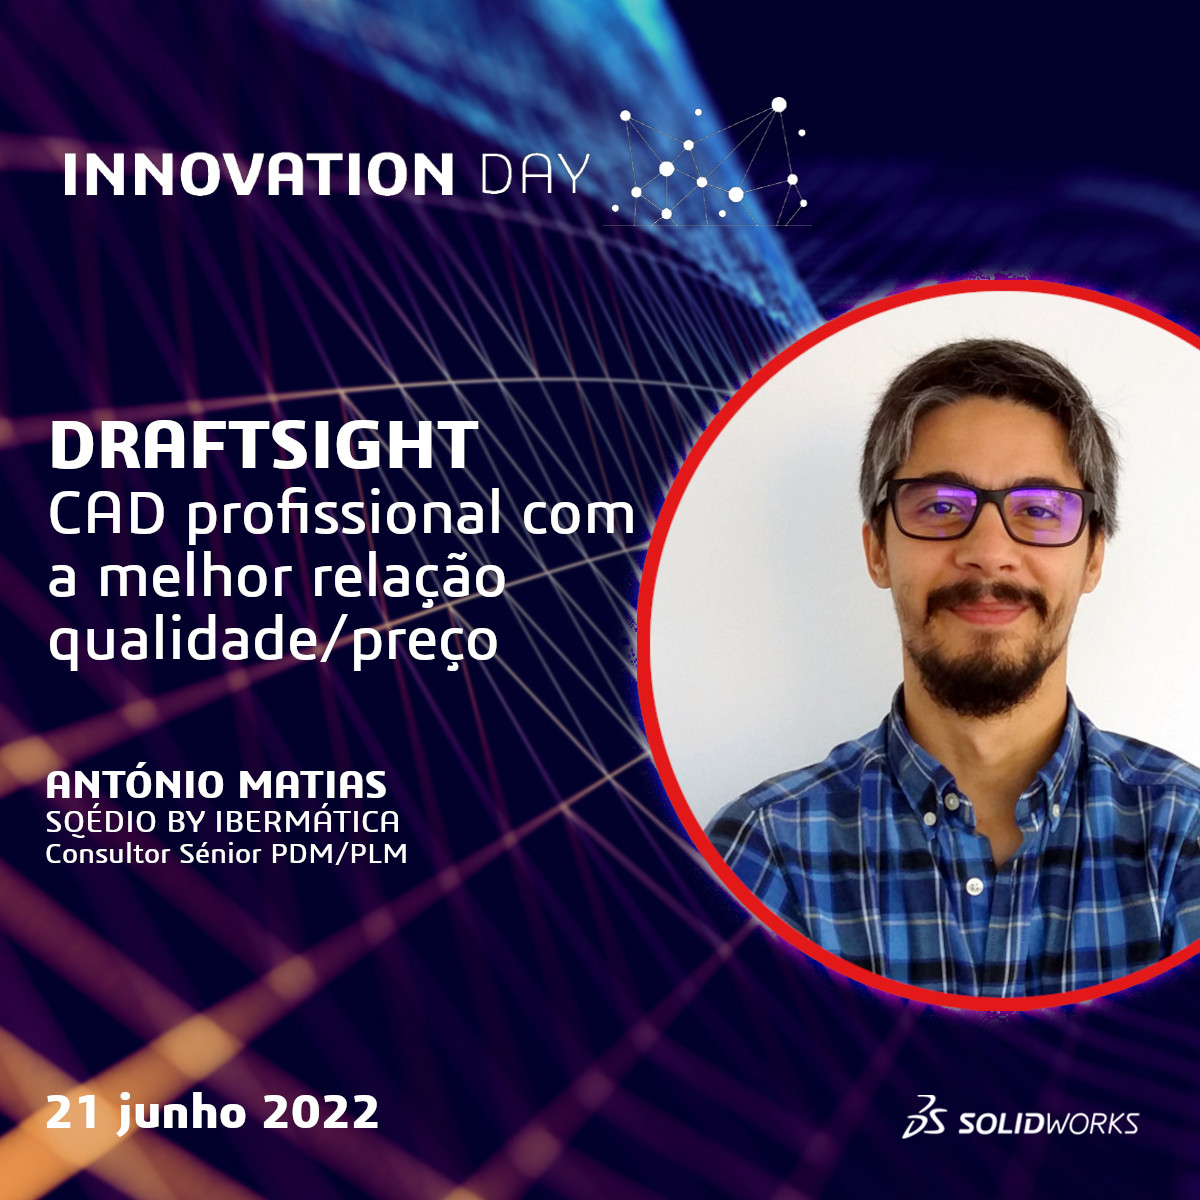 SqÃ©dio by IbermÃ¡tica | innovation Day 2022 - DraftSight